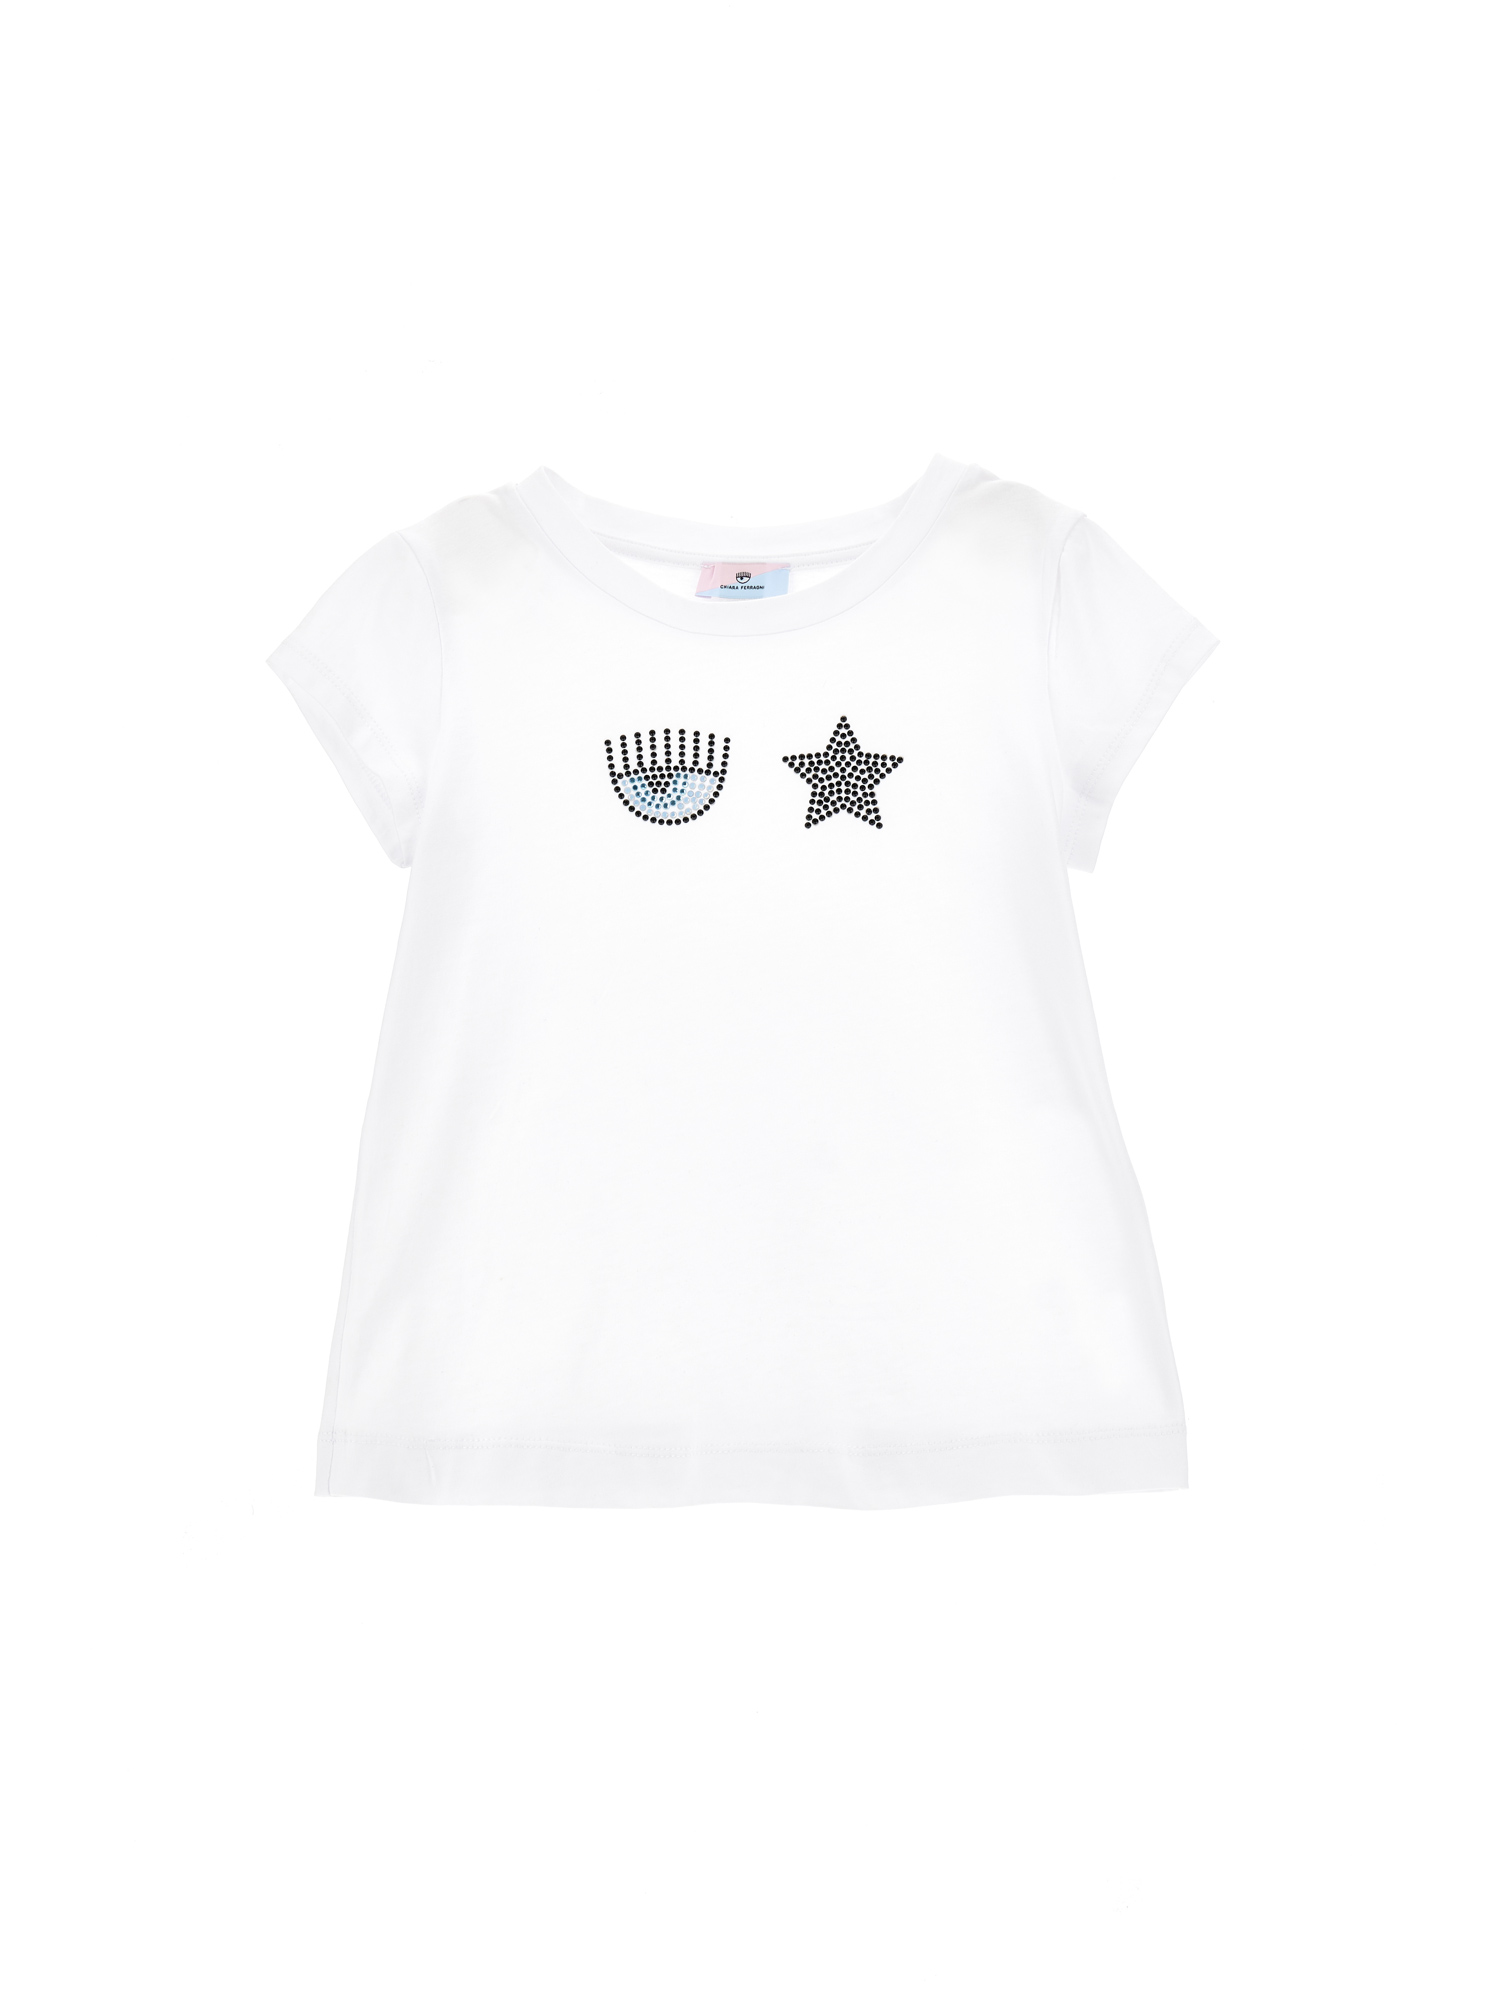 Chiara Ferragni Eyestar Embroidery T-shirt In White